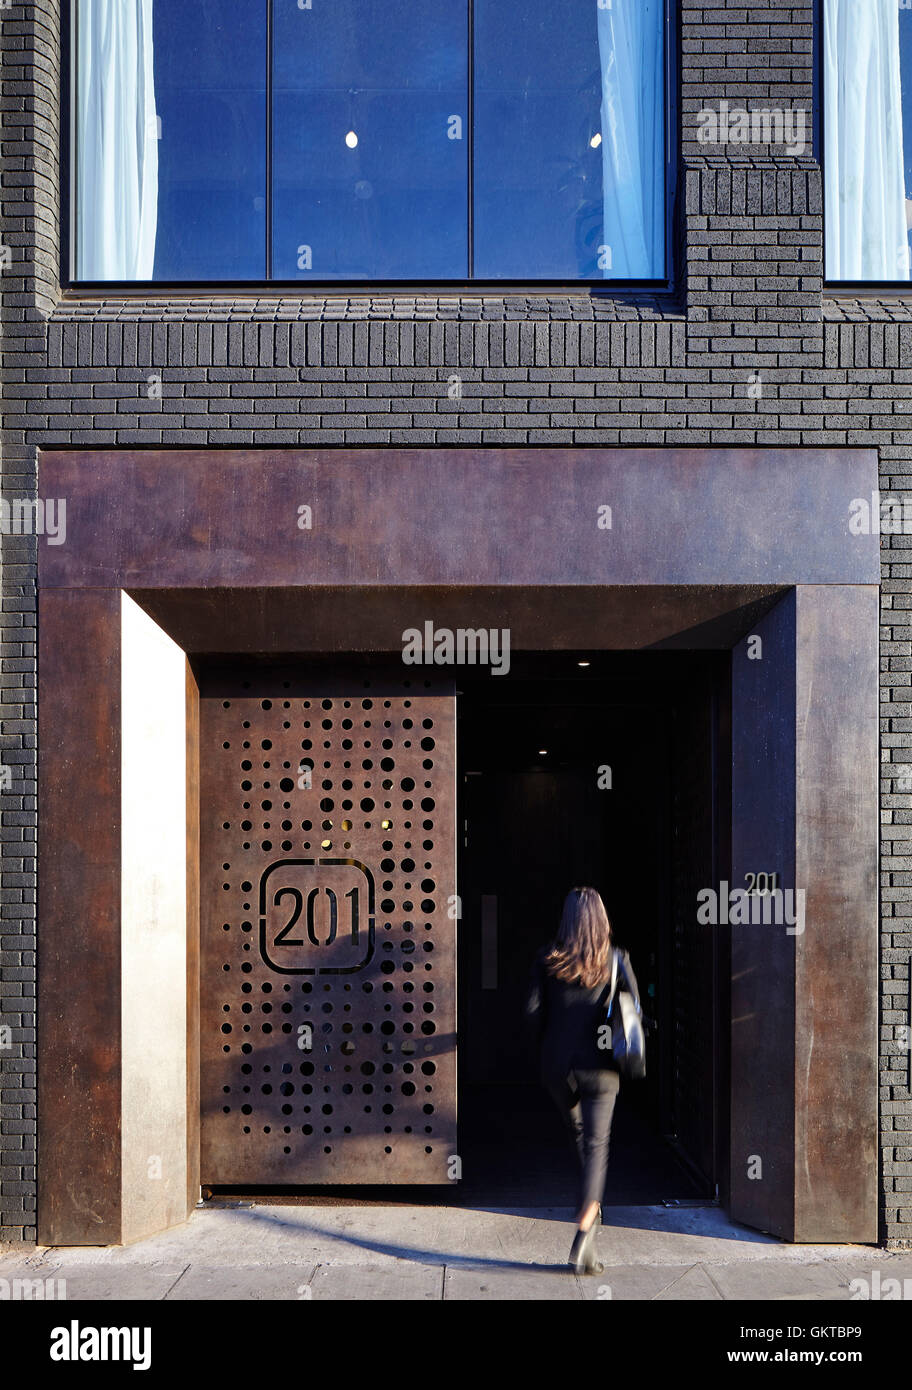 Woman entering the building through steel doorway. 201 Borough High Street, London, United Kingdom. Architect: Stiff + Trevillion Architects, 2016. Stock Photo